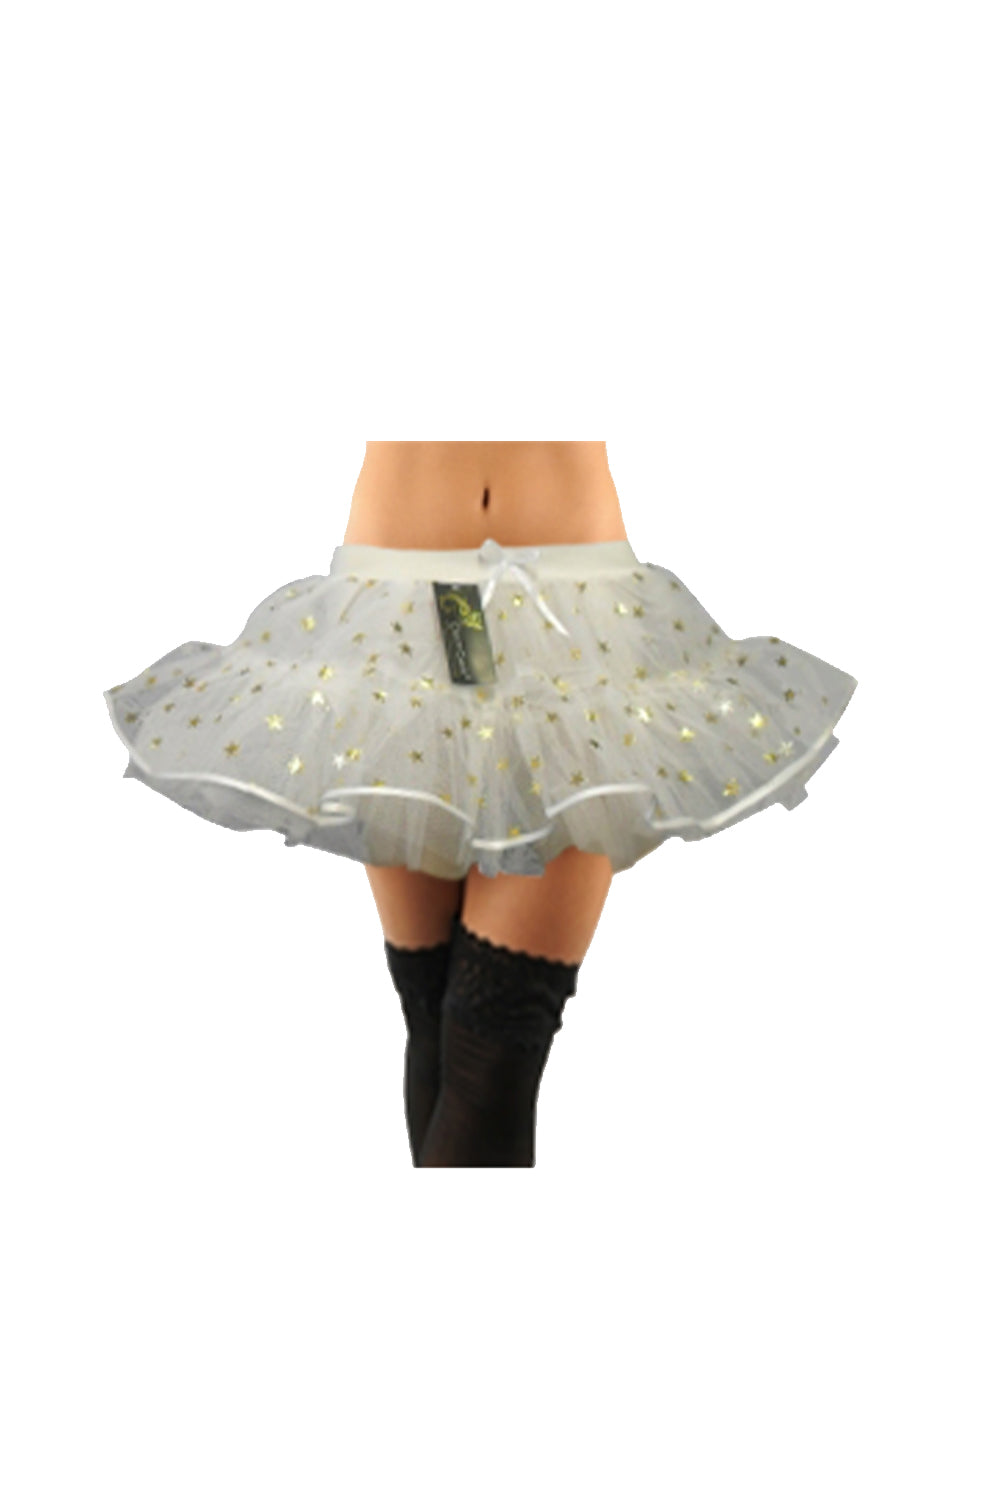 Crazy Chicks Adult 4 Layer Tutu Skirt